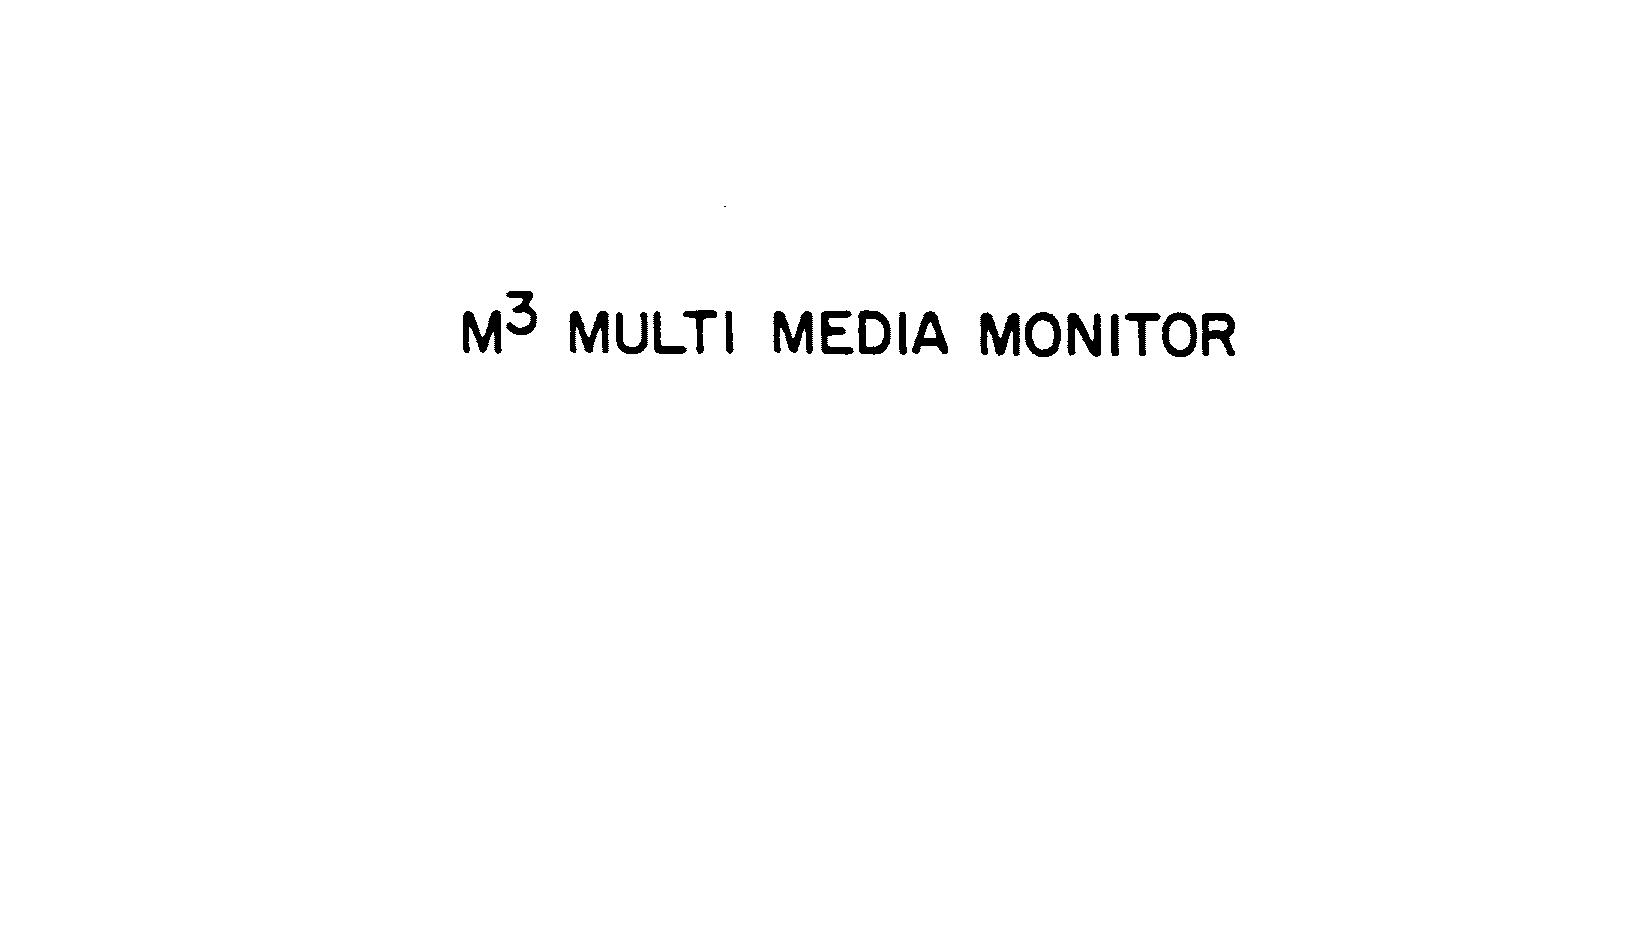  M3 MULTI MEDIA MONITOR